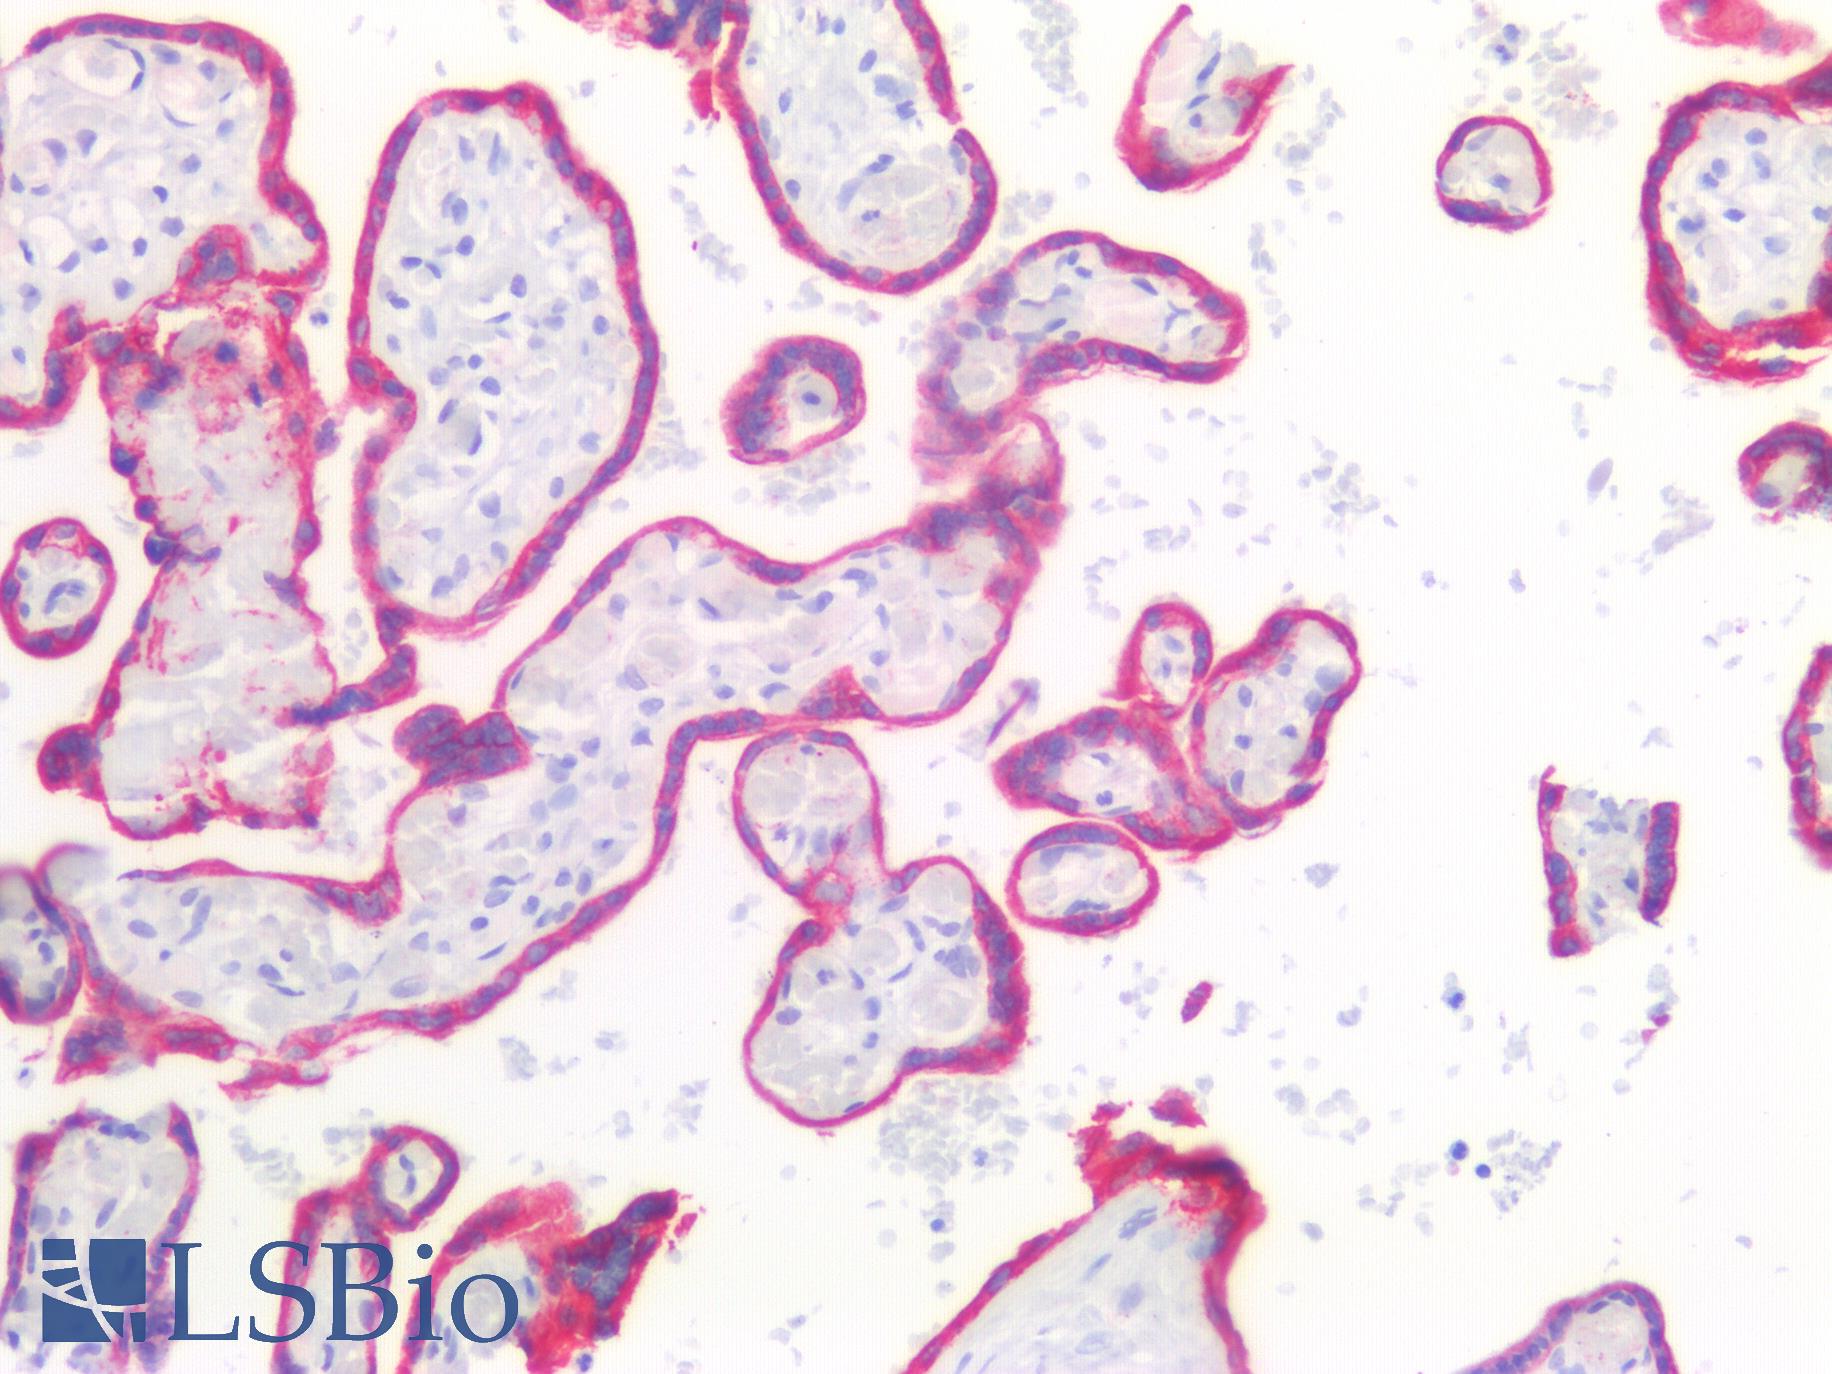 KRT8 / CK8 / Cytokeratin 8 Antibody - Human Placenta: Formalin-Fixed, Paraffin-Embedded (FFPE)